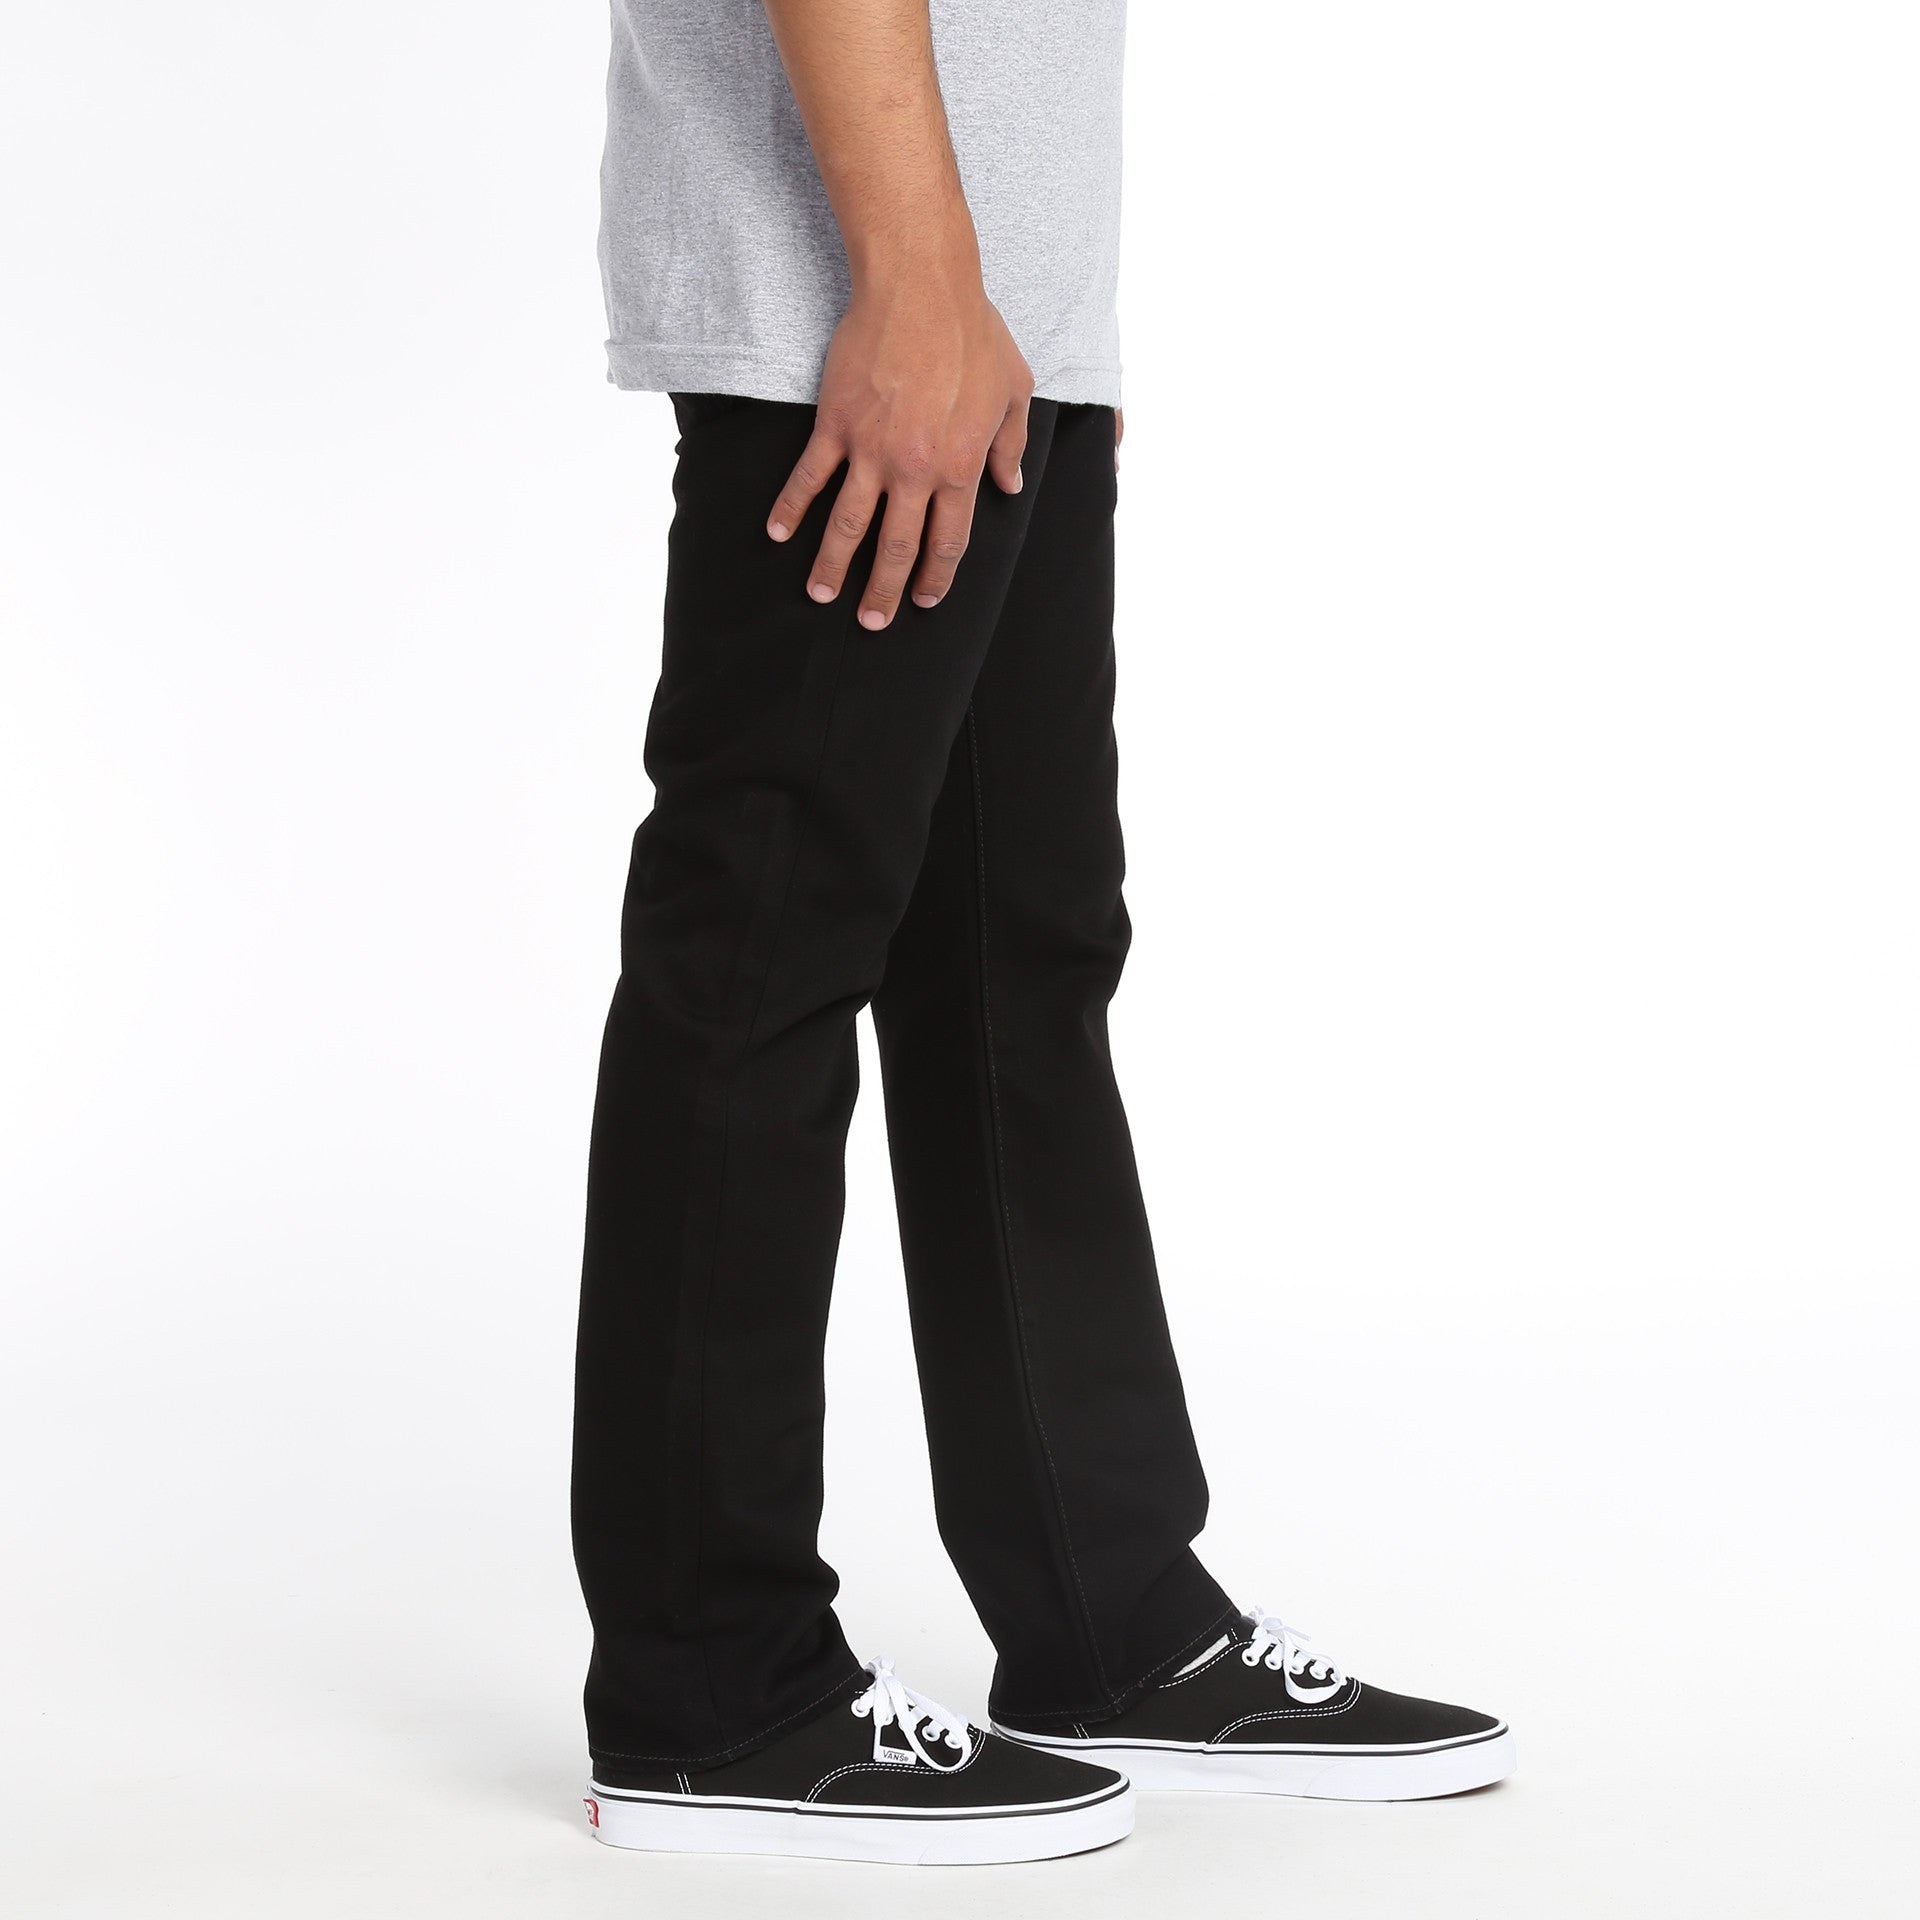 Levi's 501® Original Fit Jeans - Clean Rigid - New Star